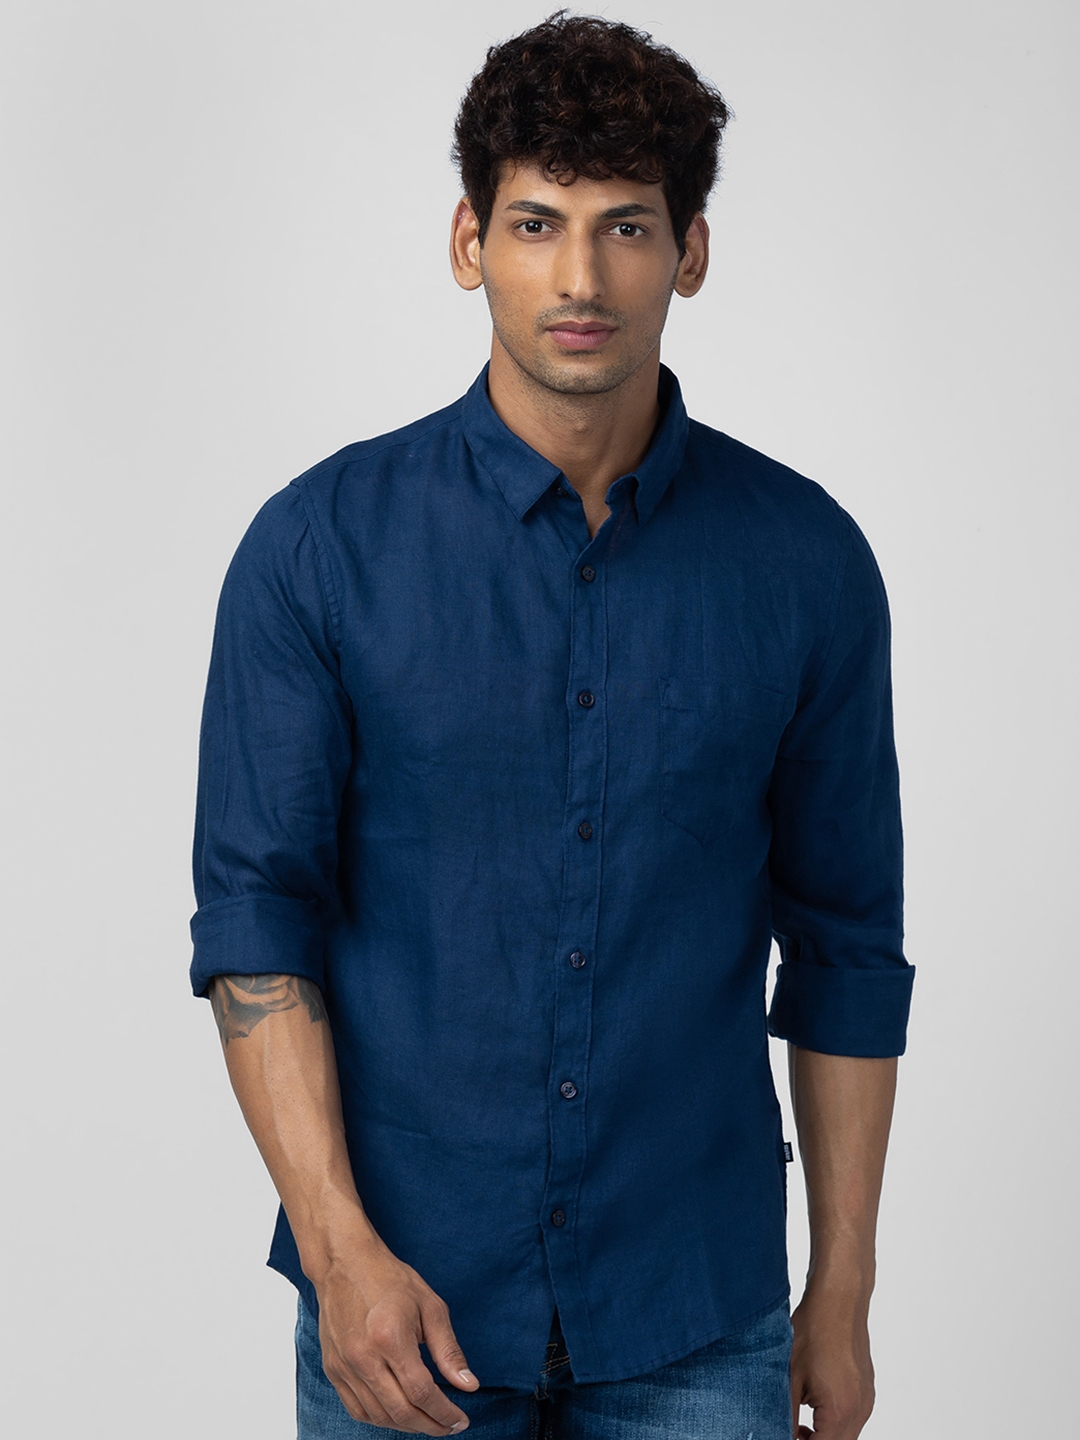 Buy Spykar Men Light Blue Cotton Slim Fit Denim Shirt at Amazon.in-sgquangbinhtourist.com.vn